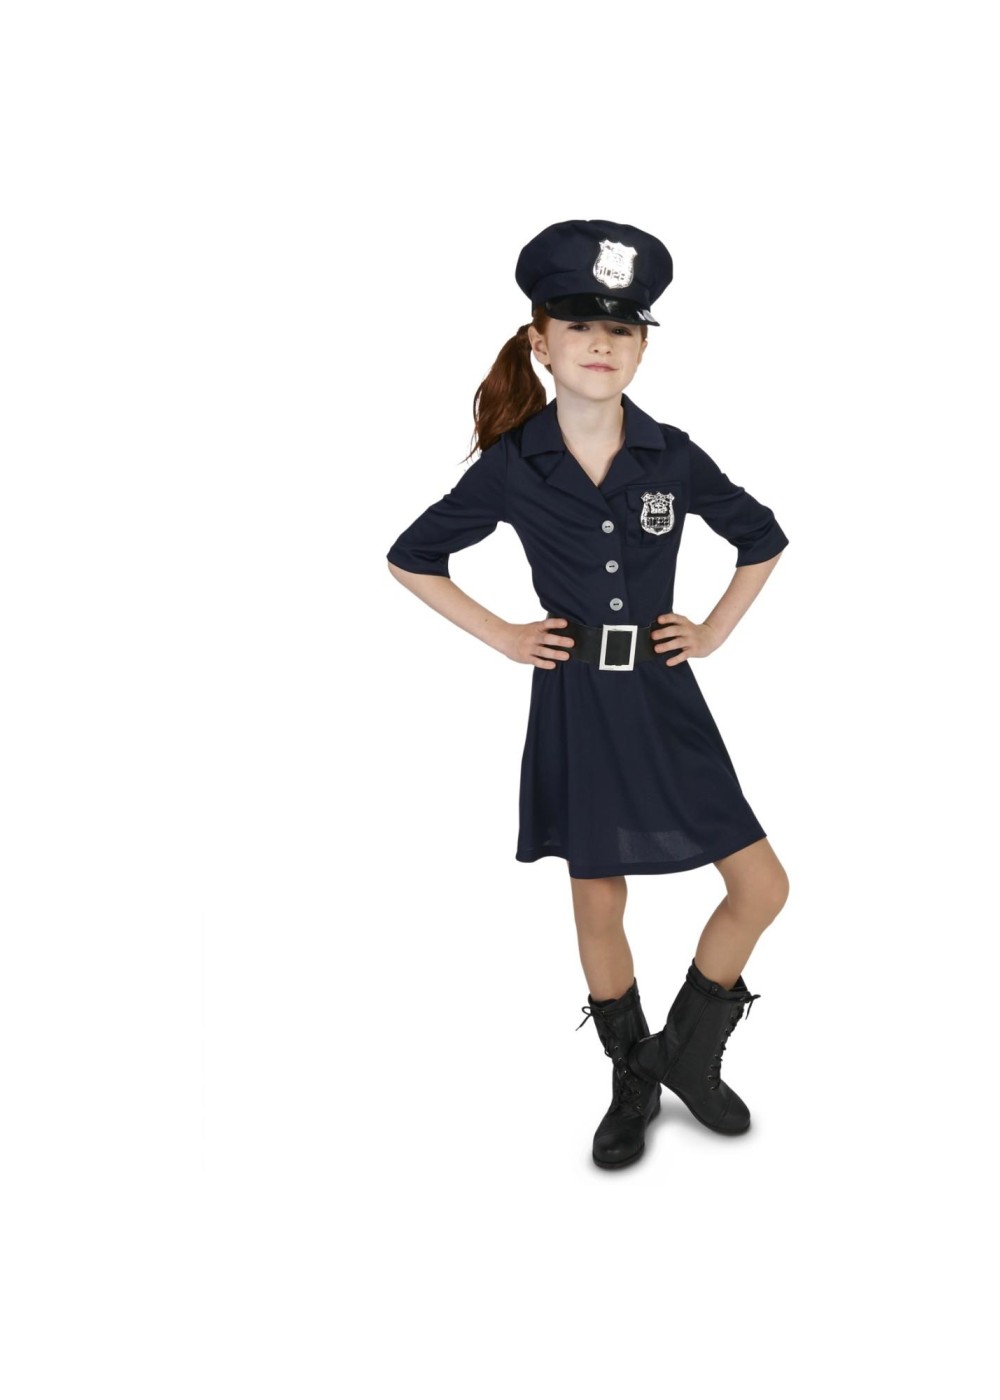 Police Girls Costume